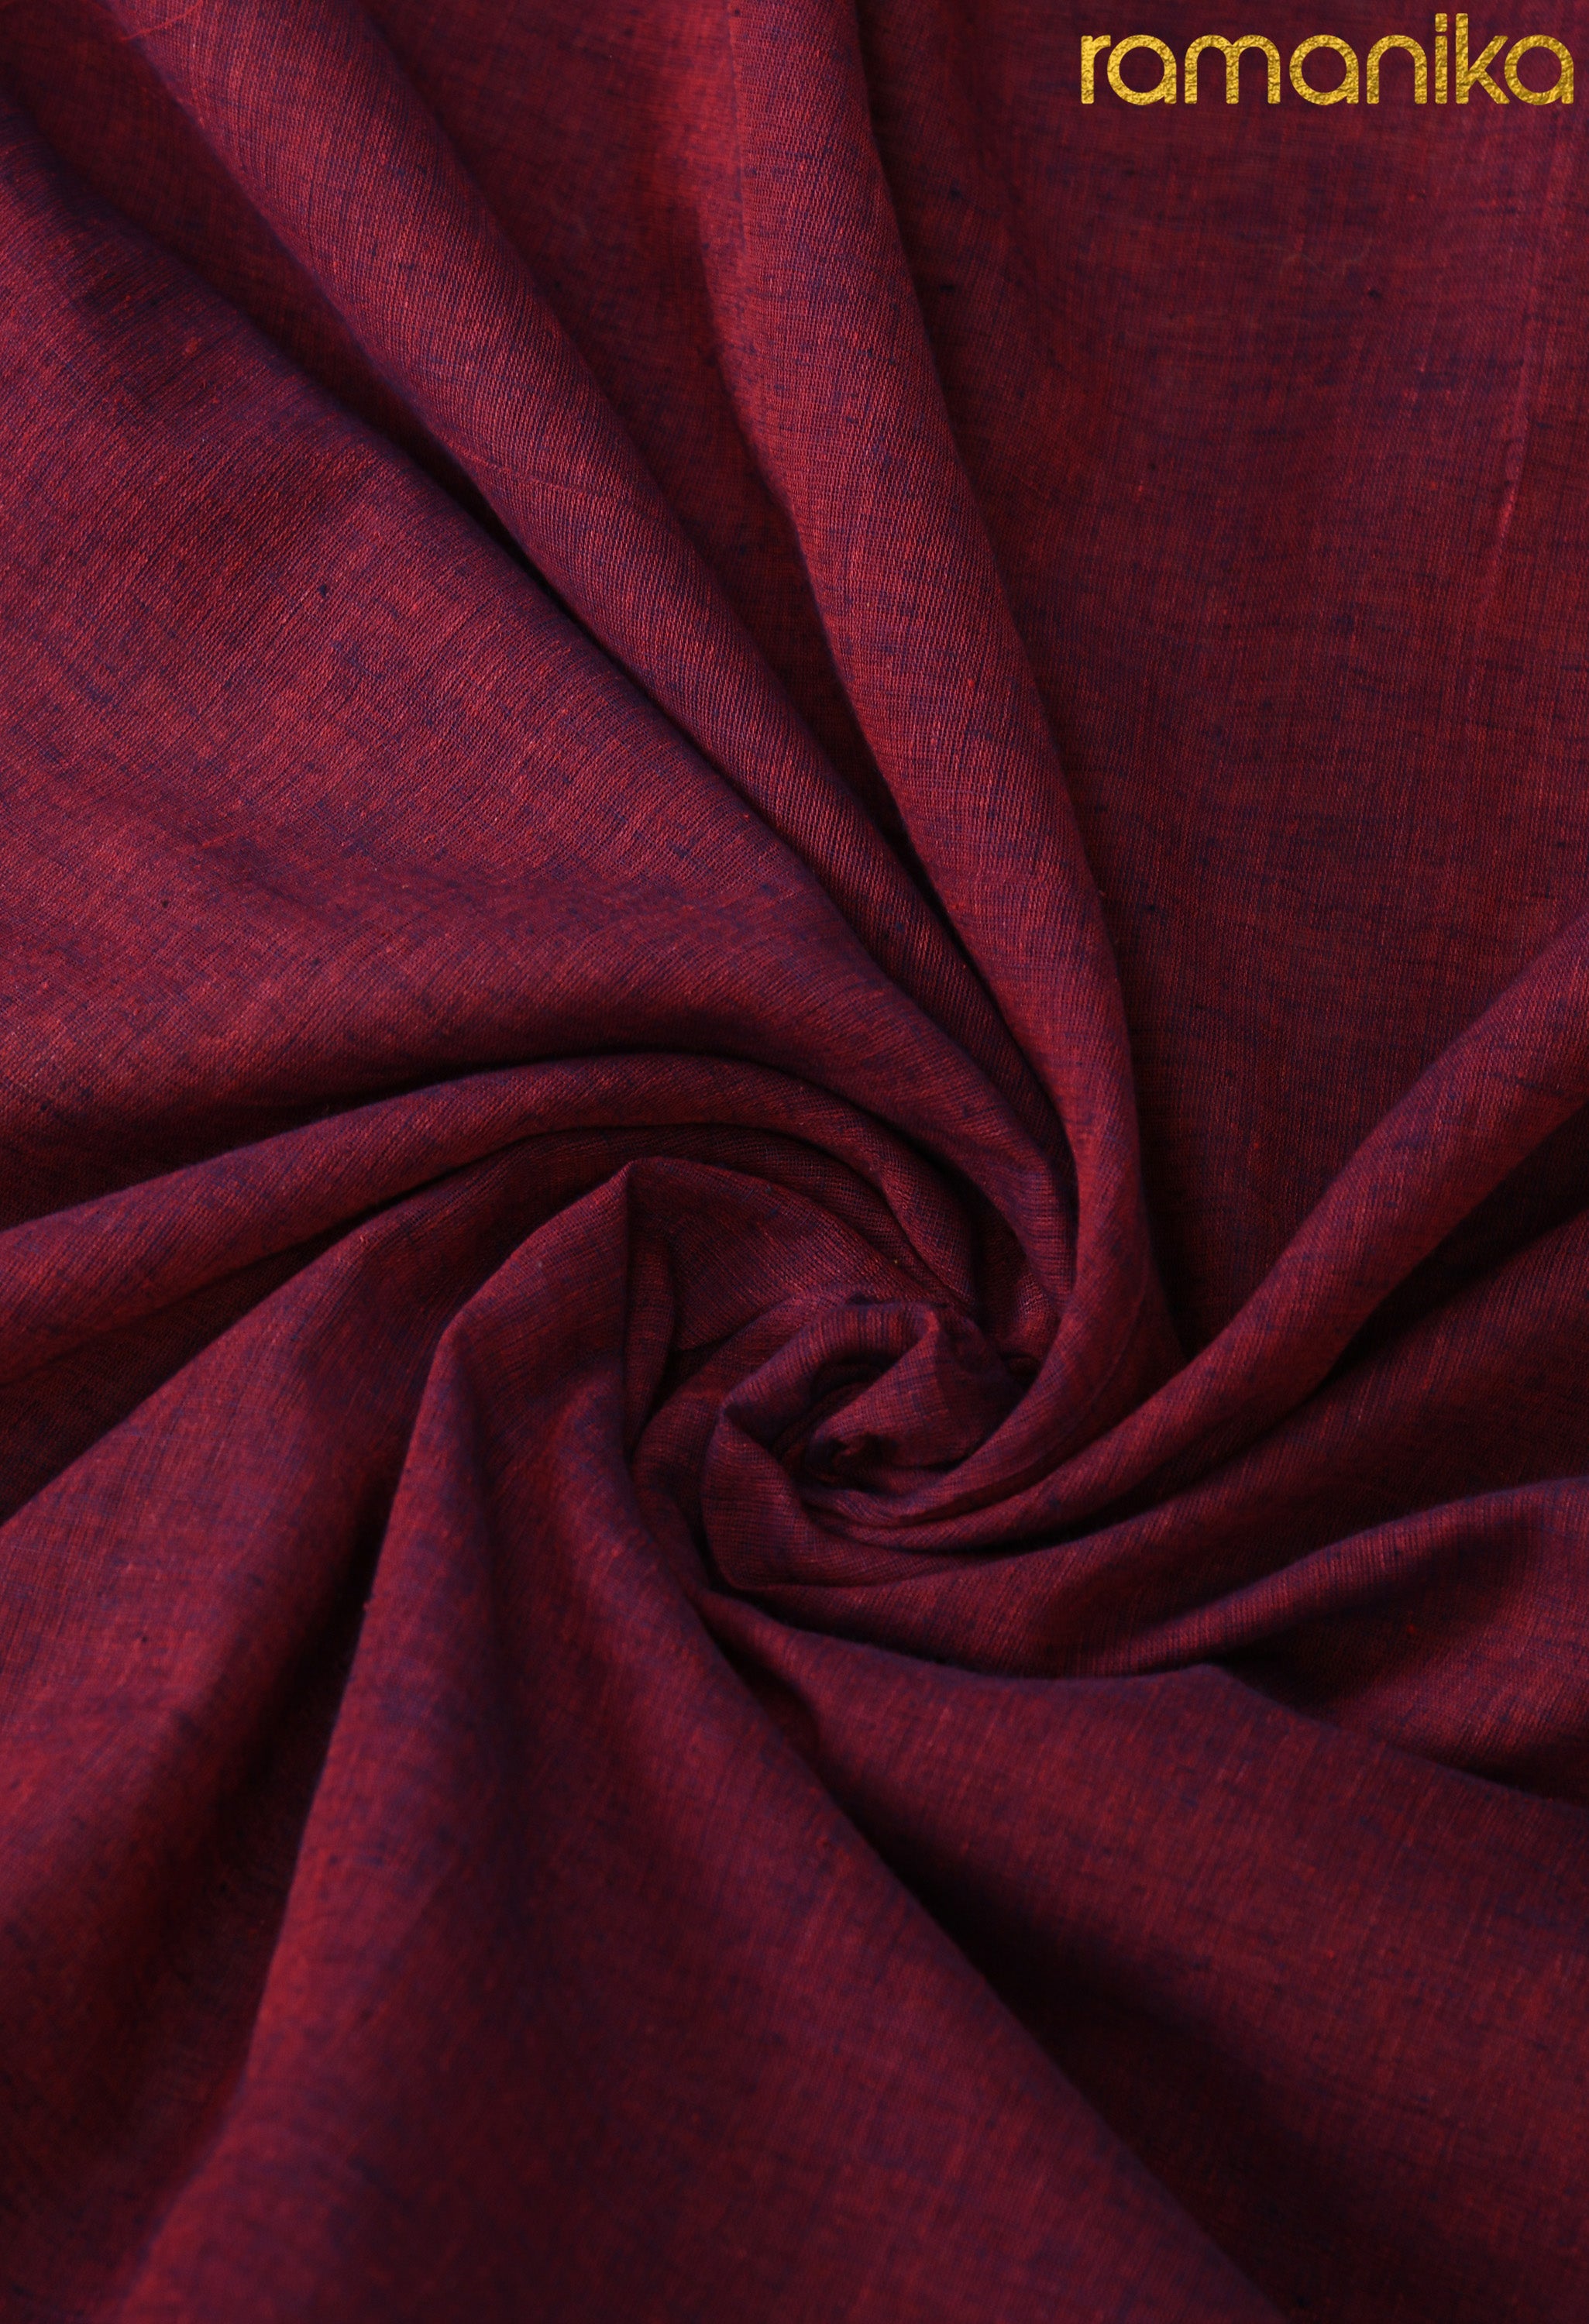 Handwoven Cotton Jamdani Saree with Contrast Blouse (Purple)